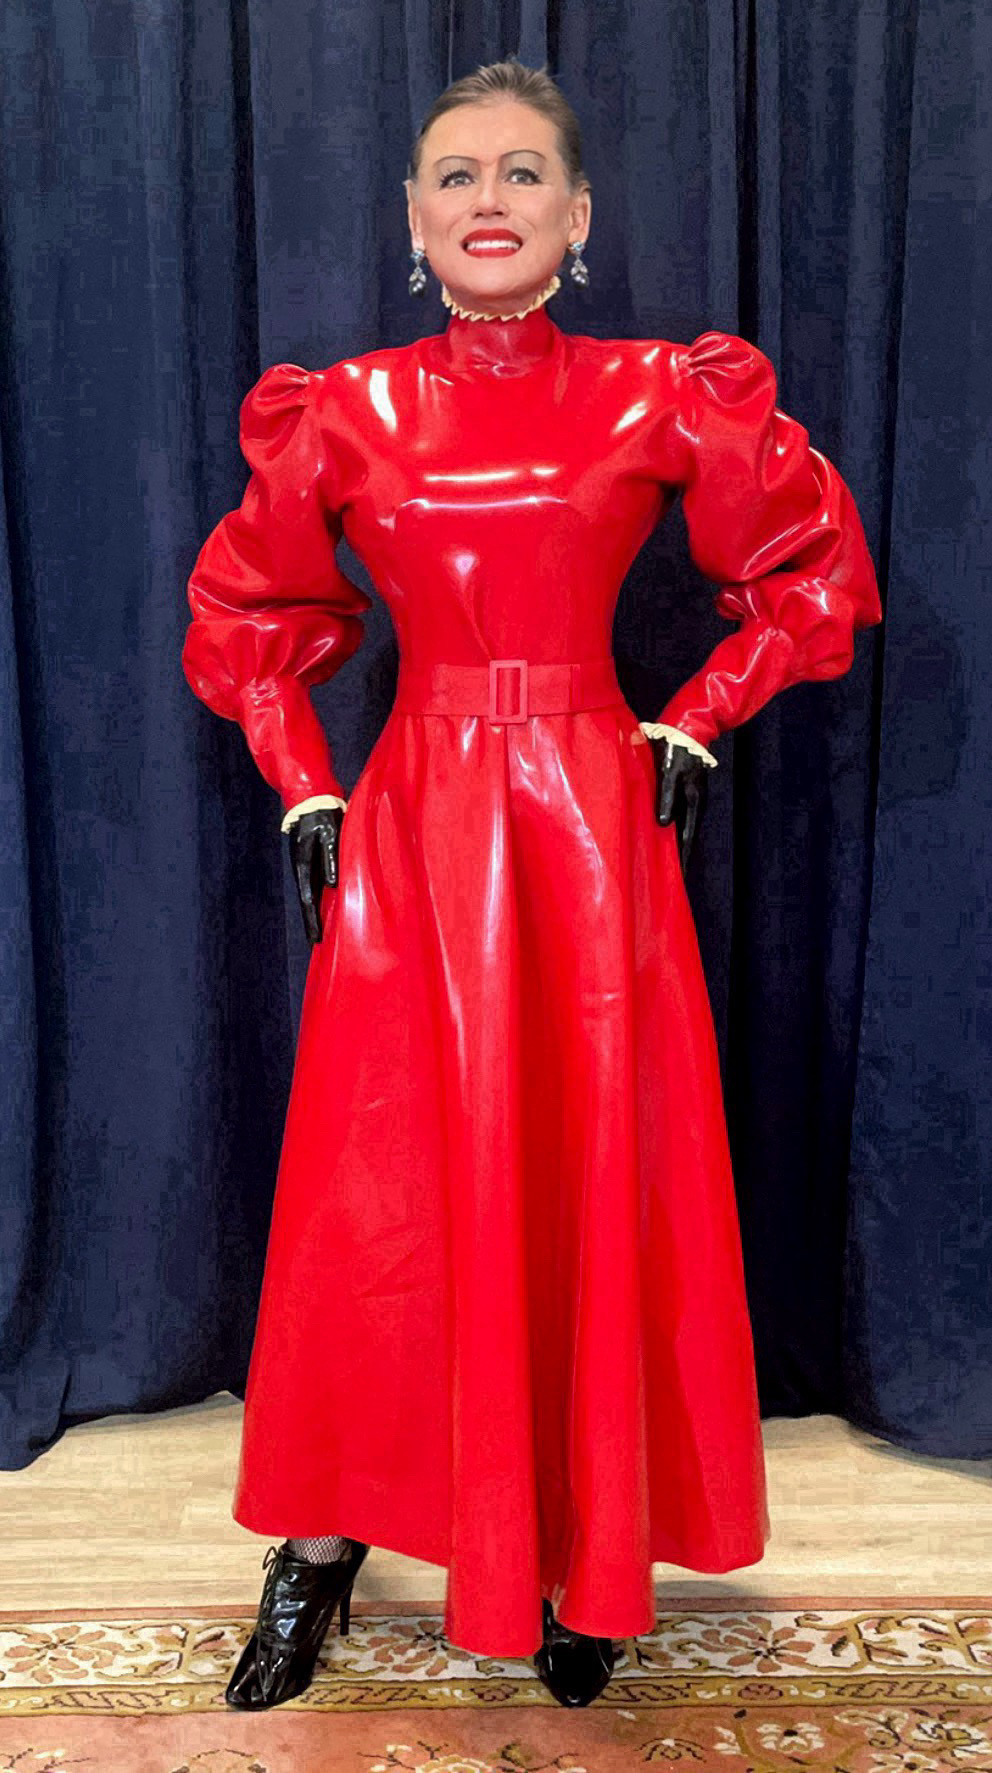 Victorian dress in rubber by Rubberdollyxx on DeviantArt